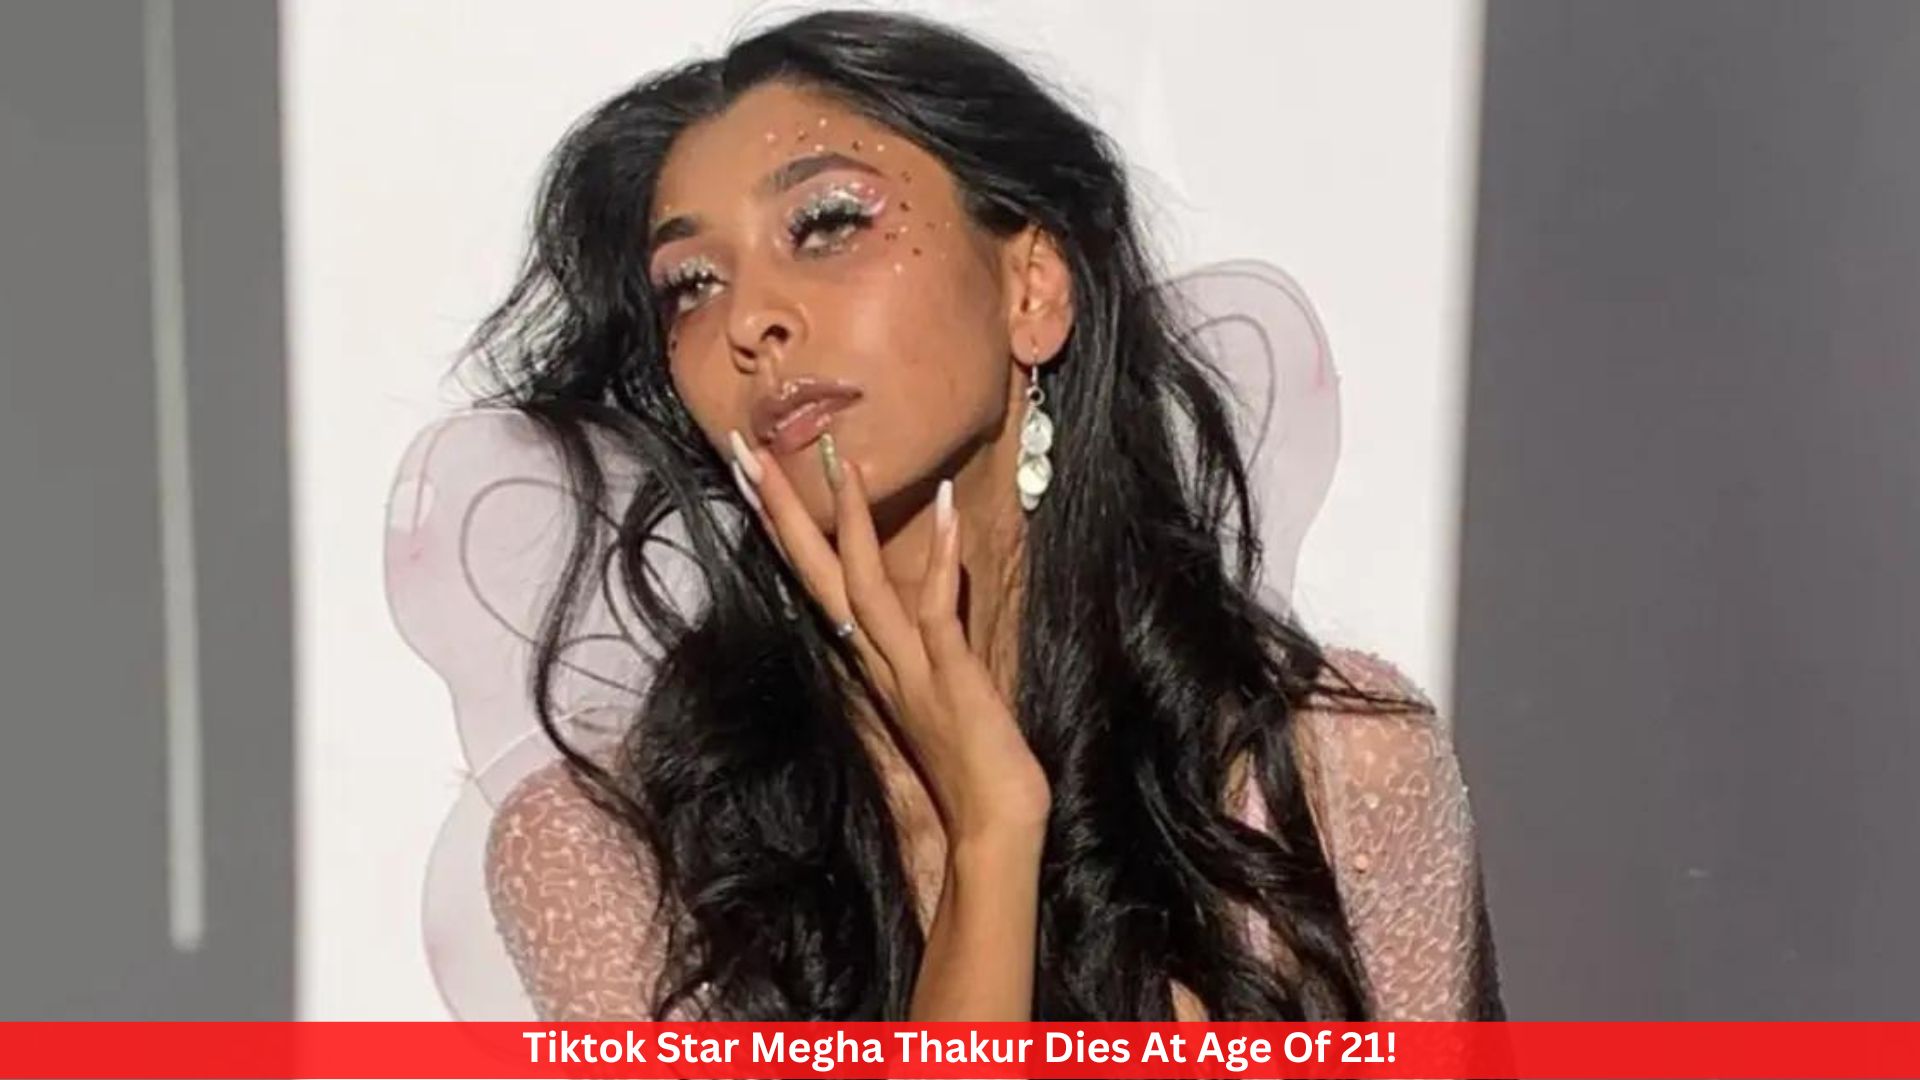 Tiktok Star Megha Thakur Dies At Age Of 21!